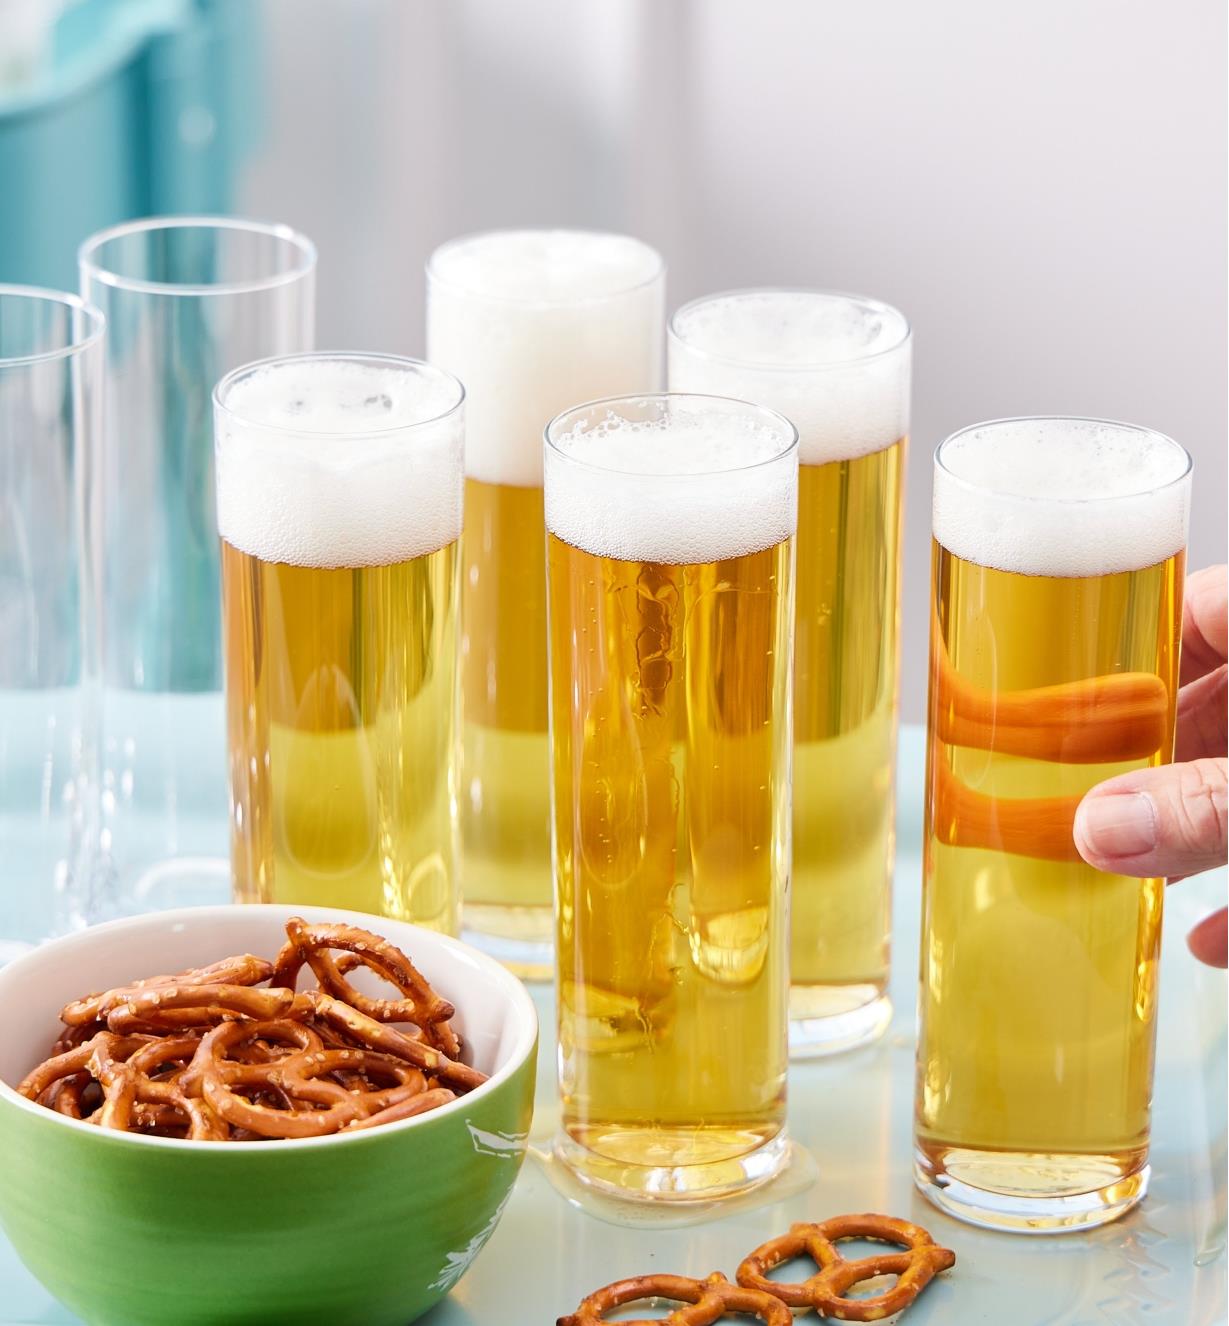 Five Kölsch glasses filled with beer next to a bowl of pretzels